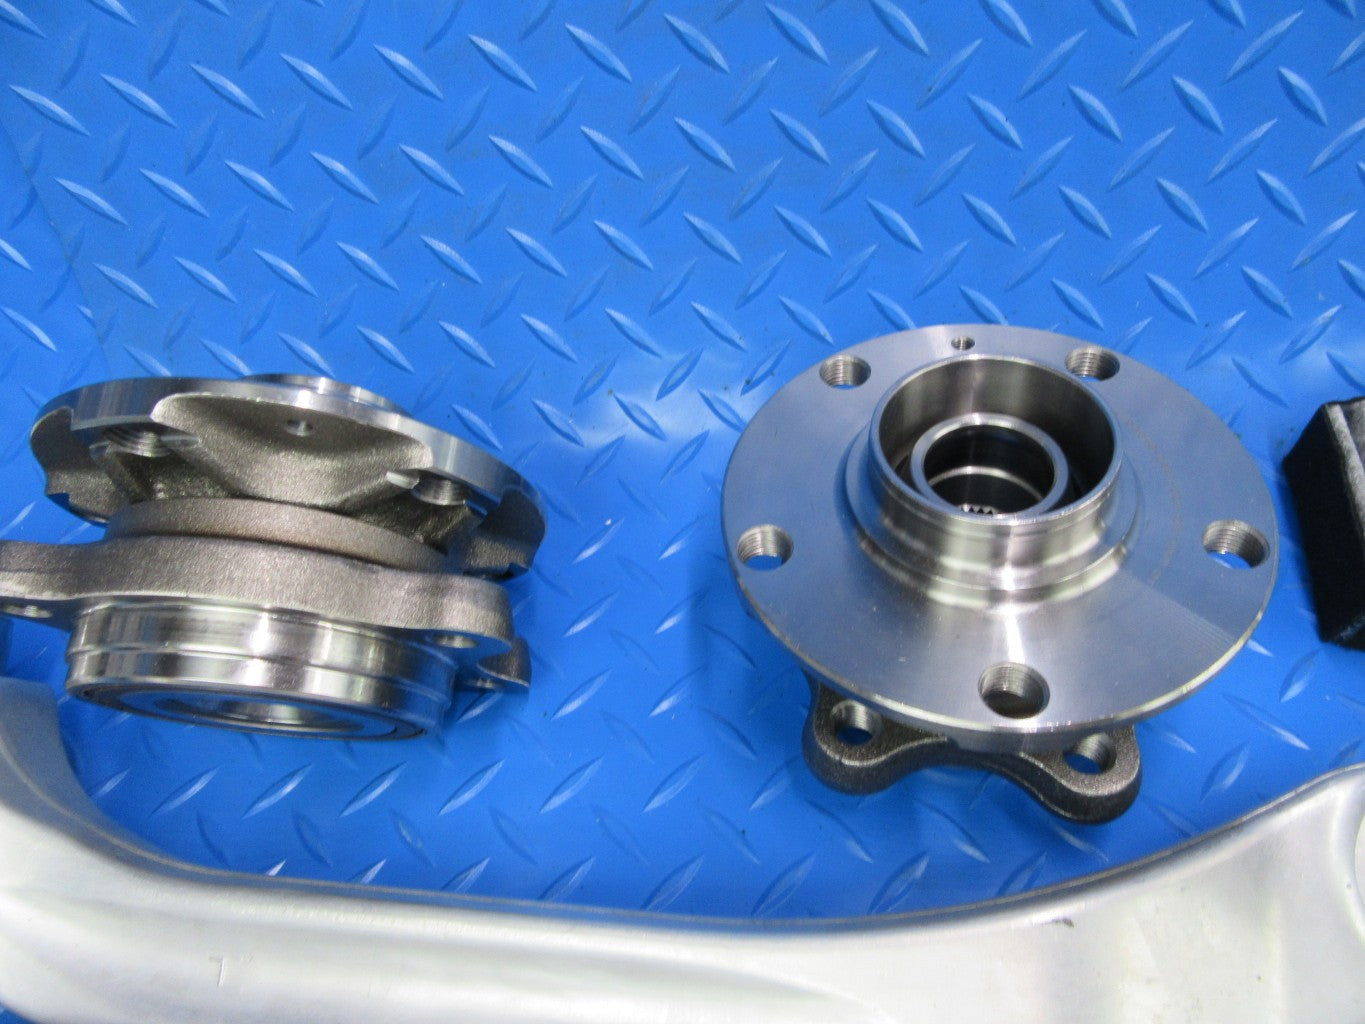 Bentley Flying Spur Gt Gtc suspension bearings filters service kit #7776